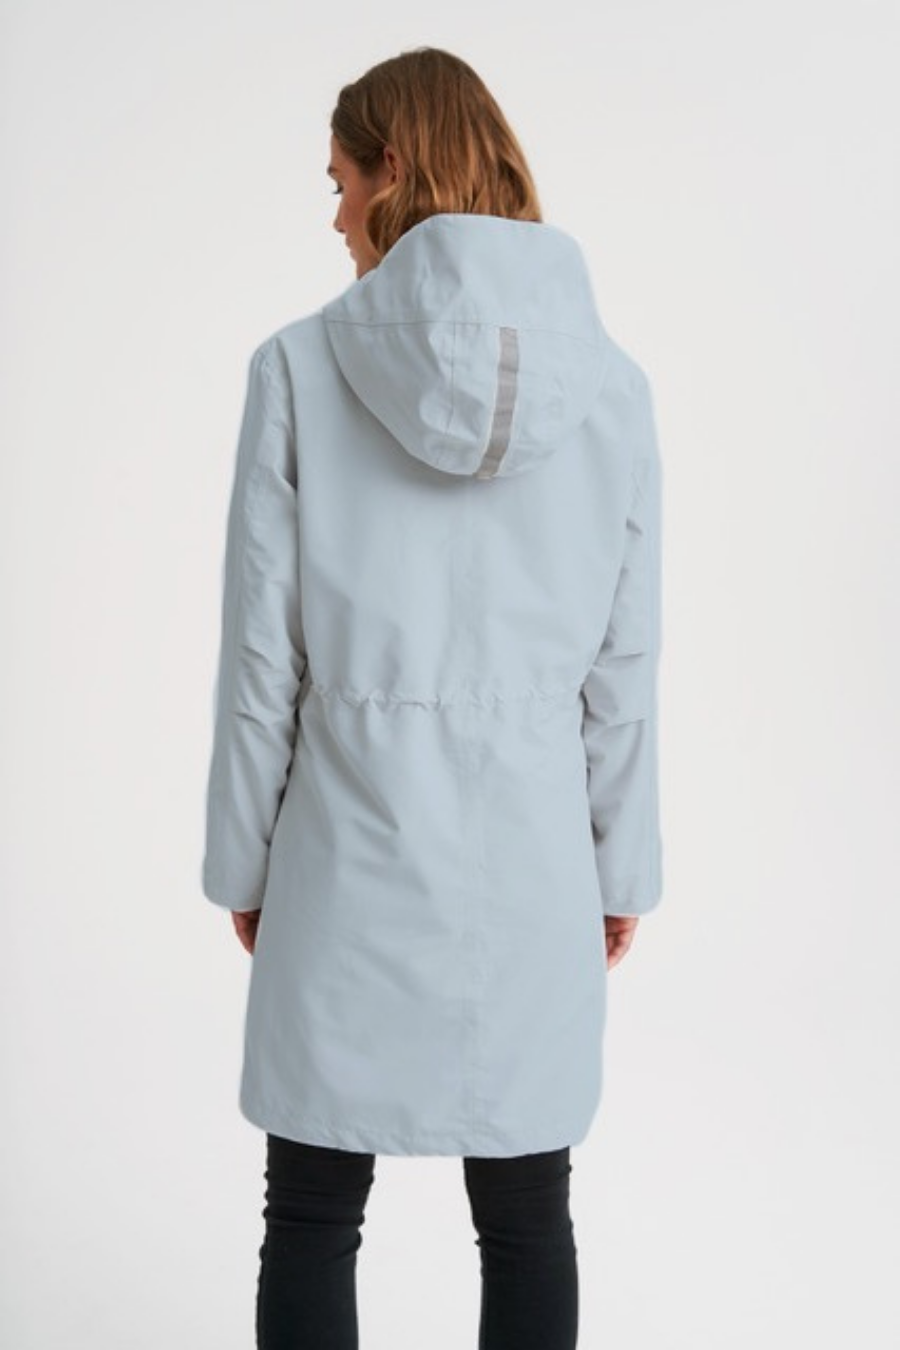 "Magic" Print Revealing Waterproof Raincoat